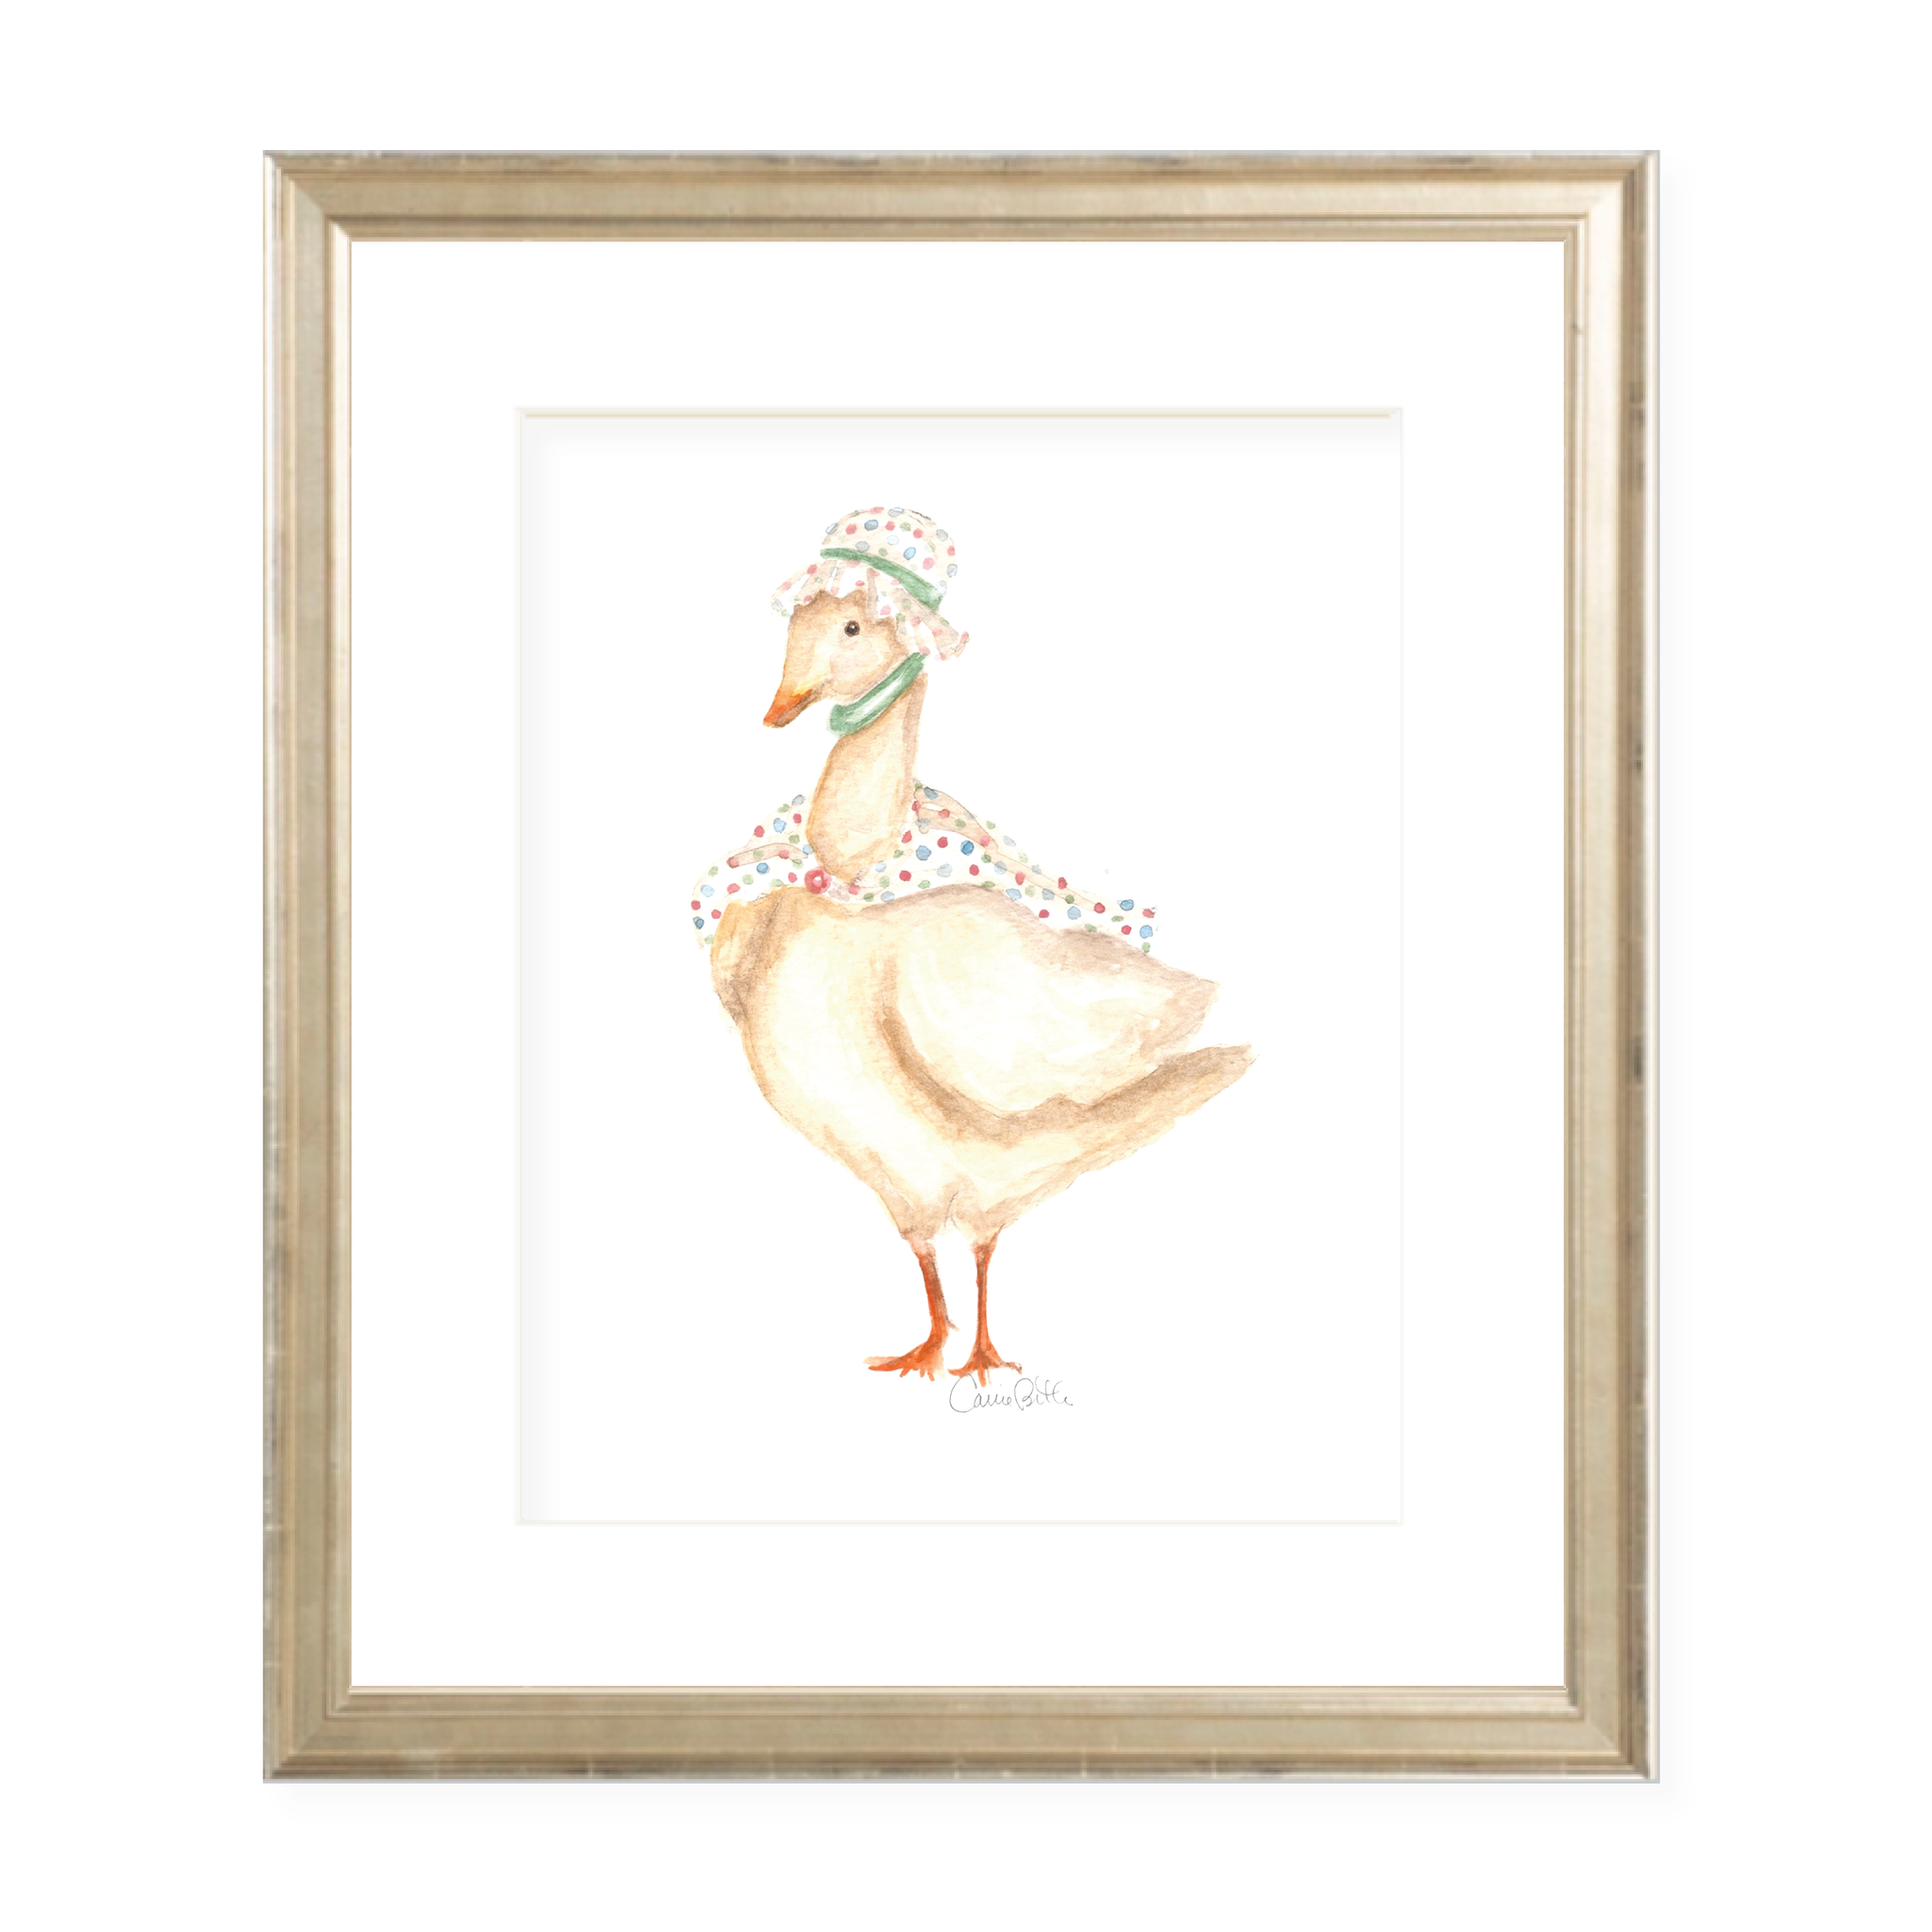 Standing Mother Goose Watercolor Print